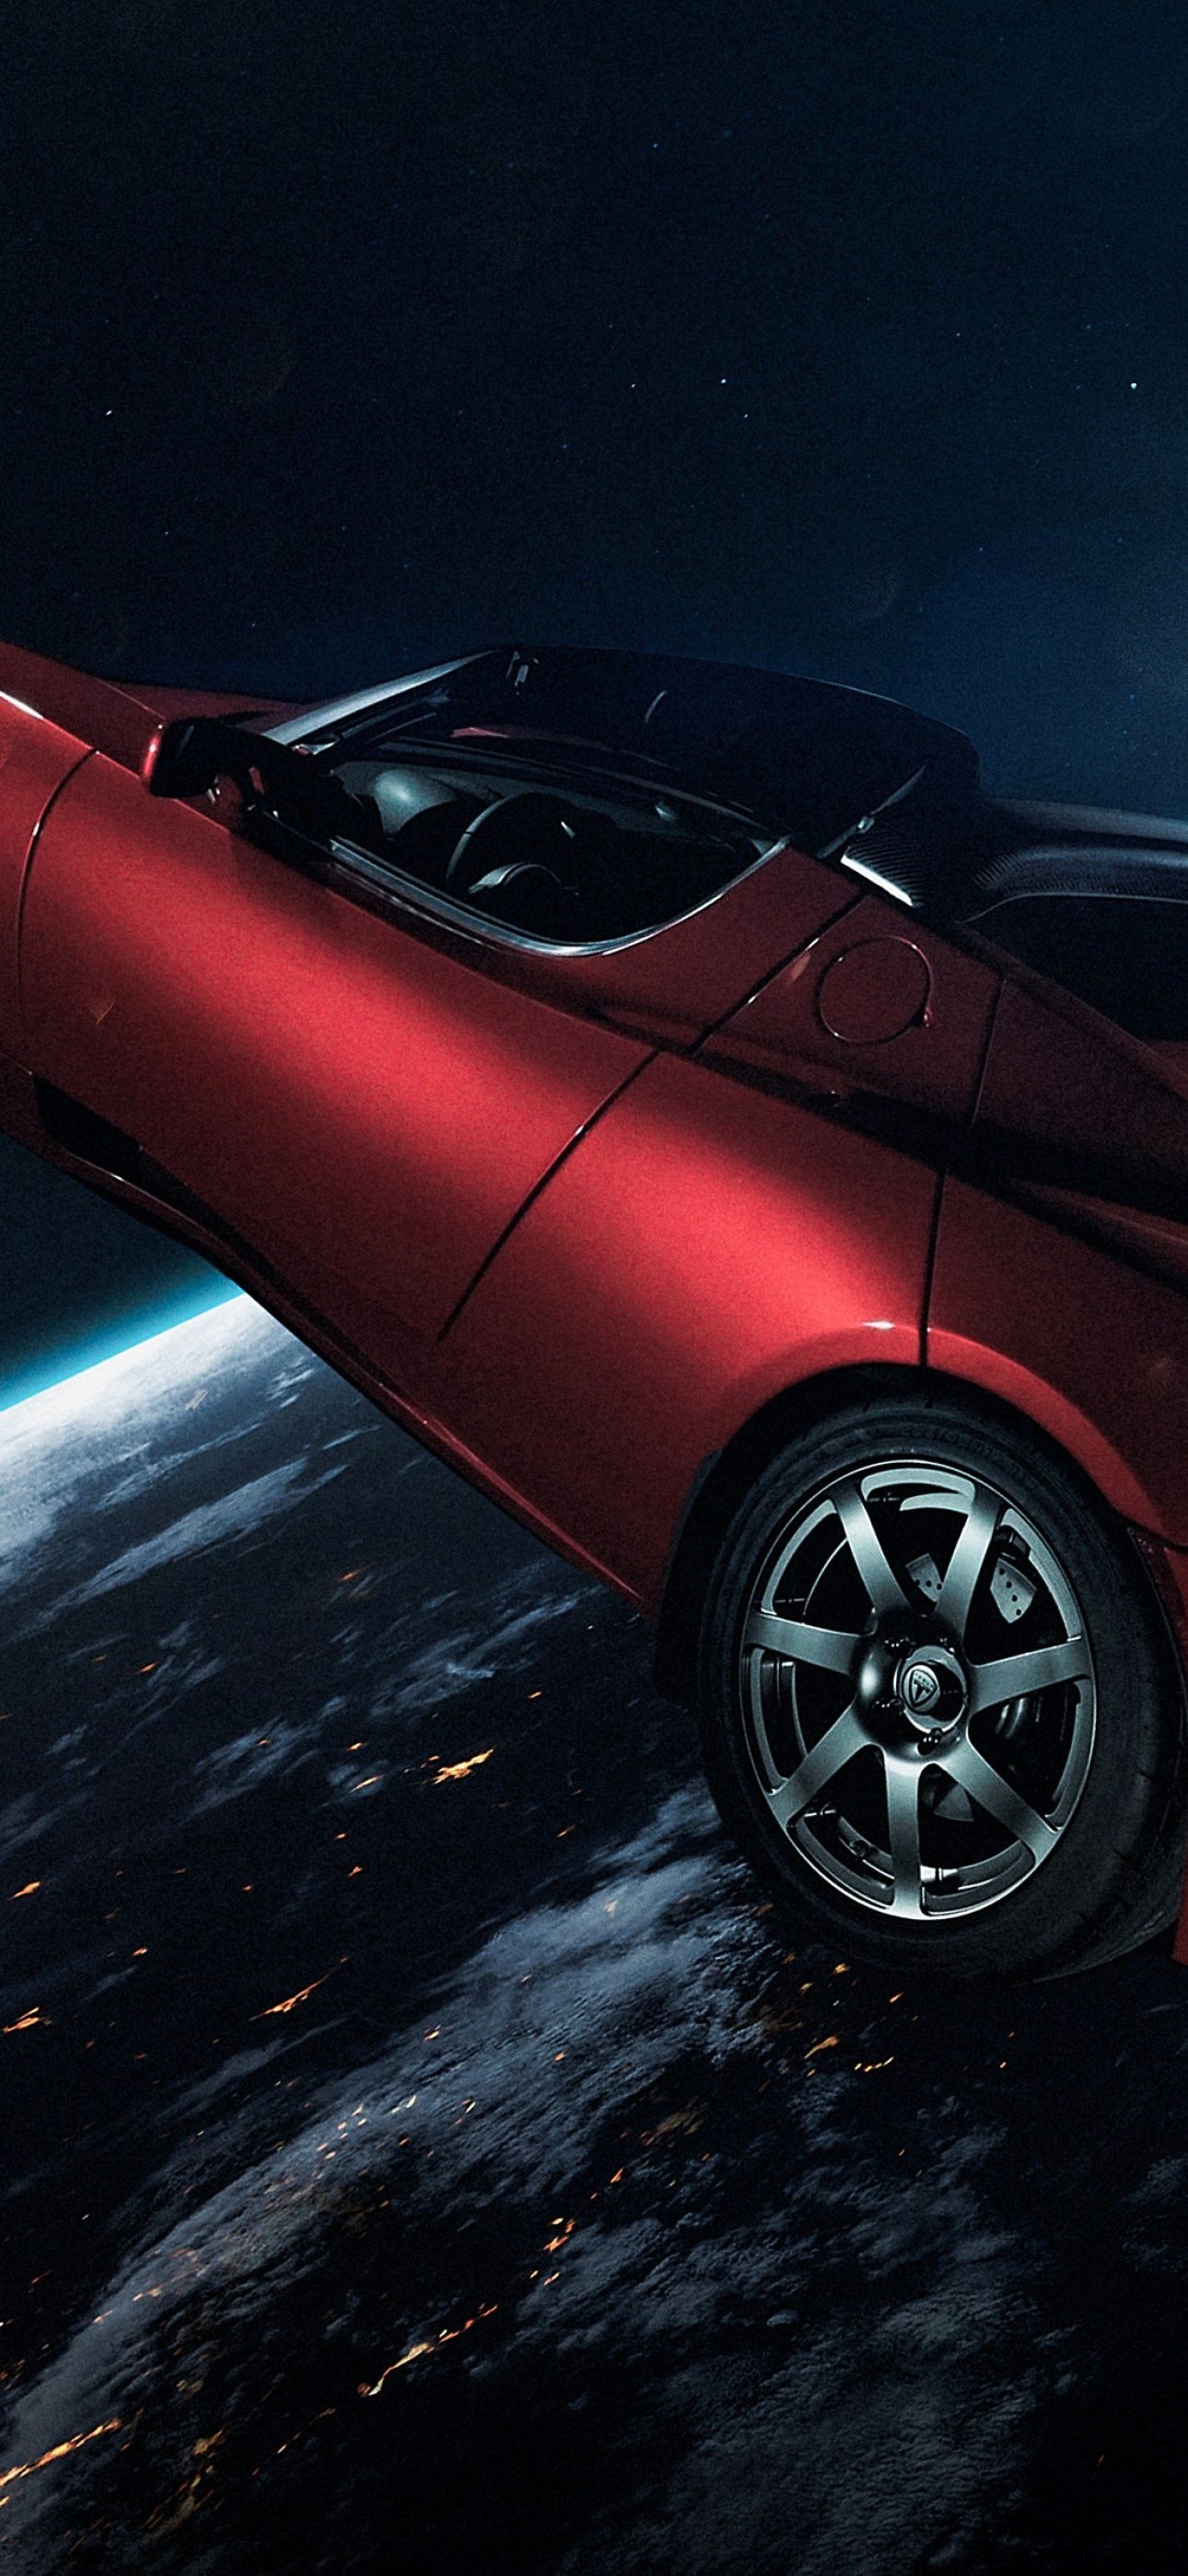 Tesla Hintergrundbild 1290x2796. Elon Musk's Tesla Roadster Wallpaper 4K, Tesla in Space, Space